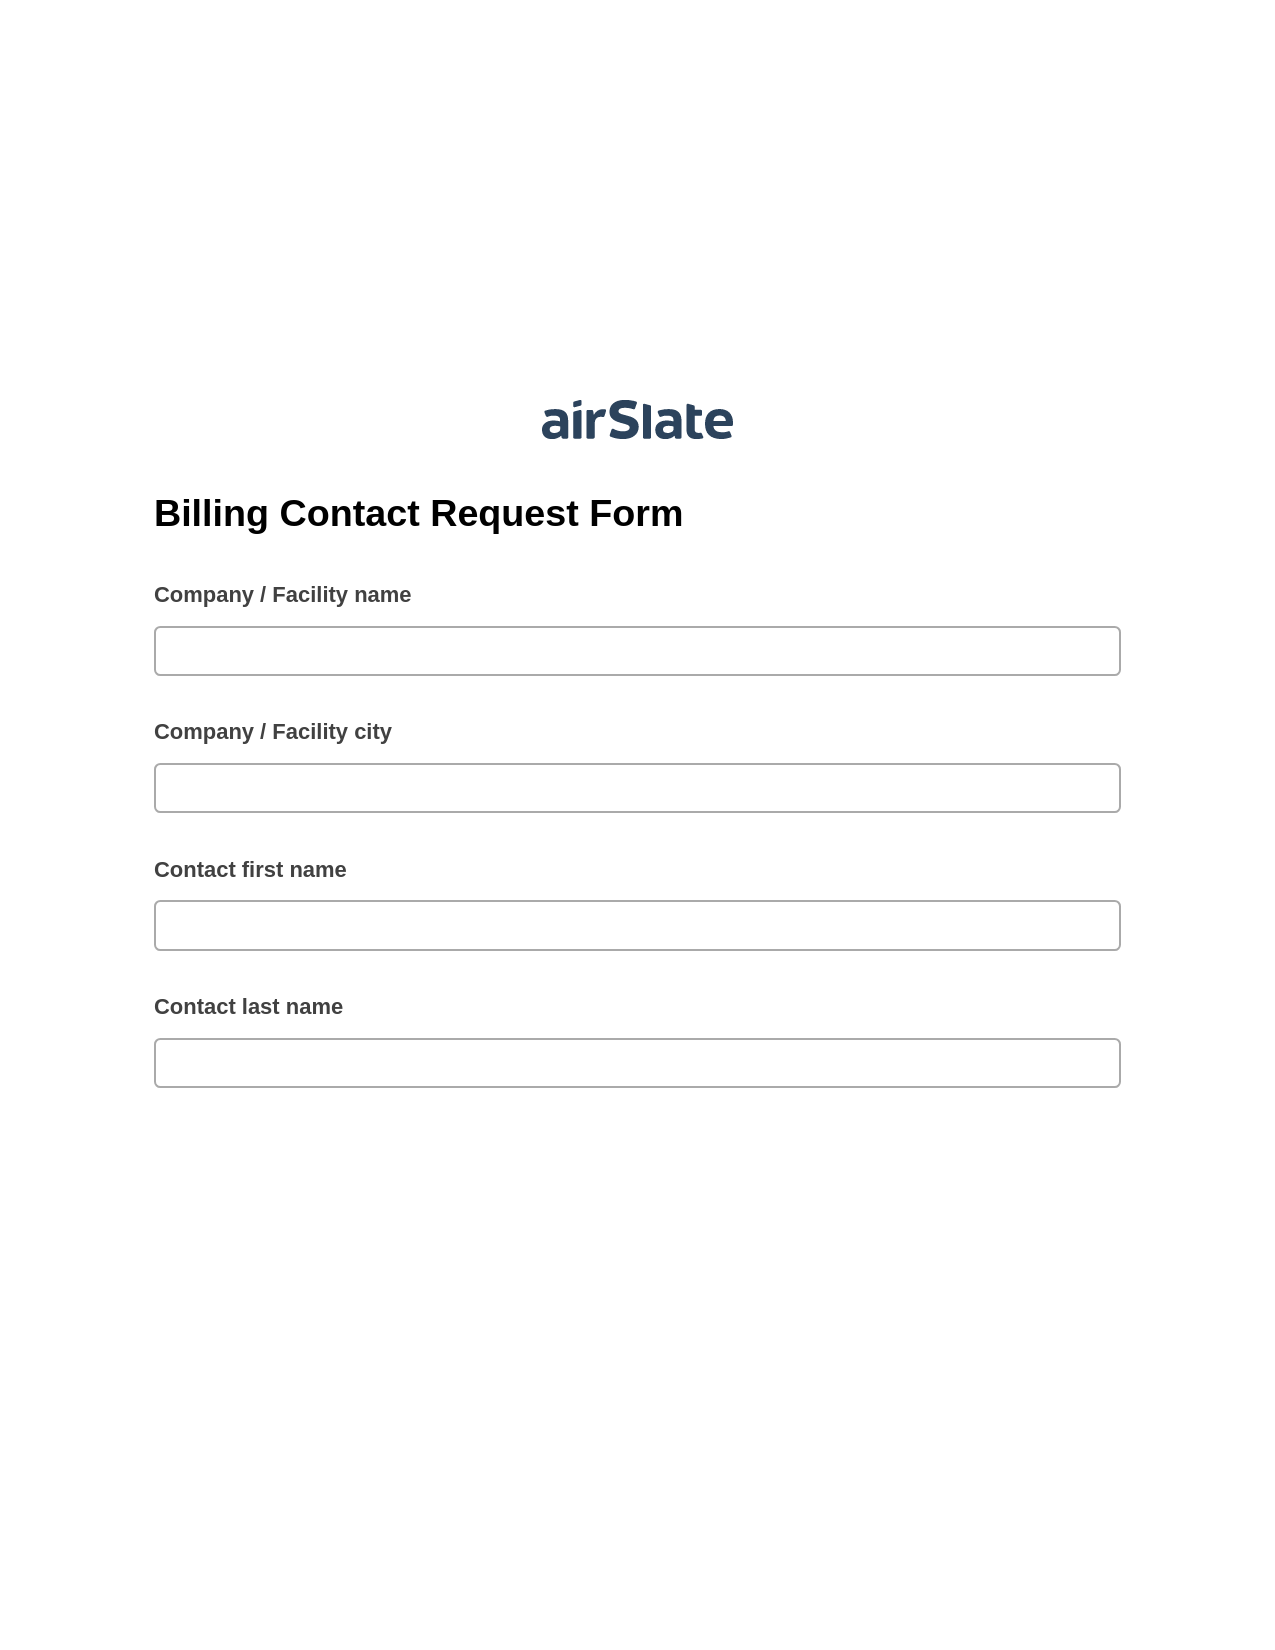 Billing Contact Request Form Pre-fill Dropdowns from CSV File Bot, SendGrid send Campaign bot, Slack Notification Postfinish Bot